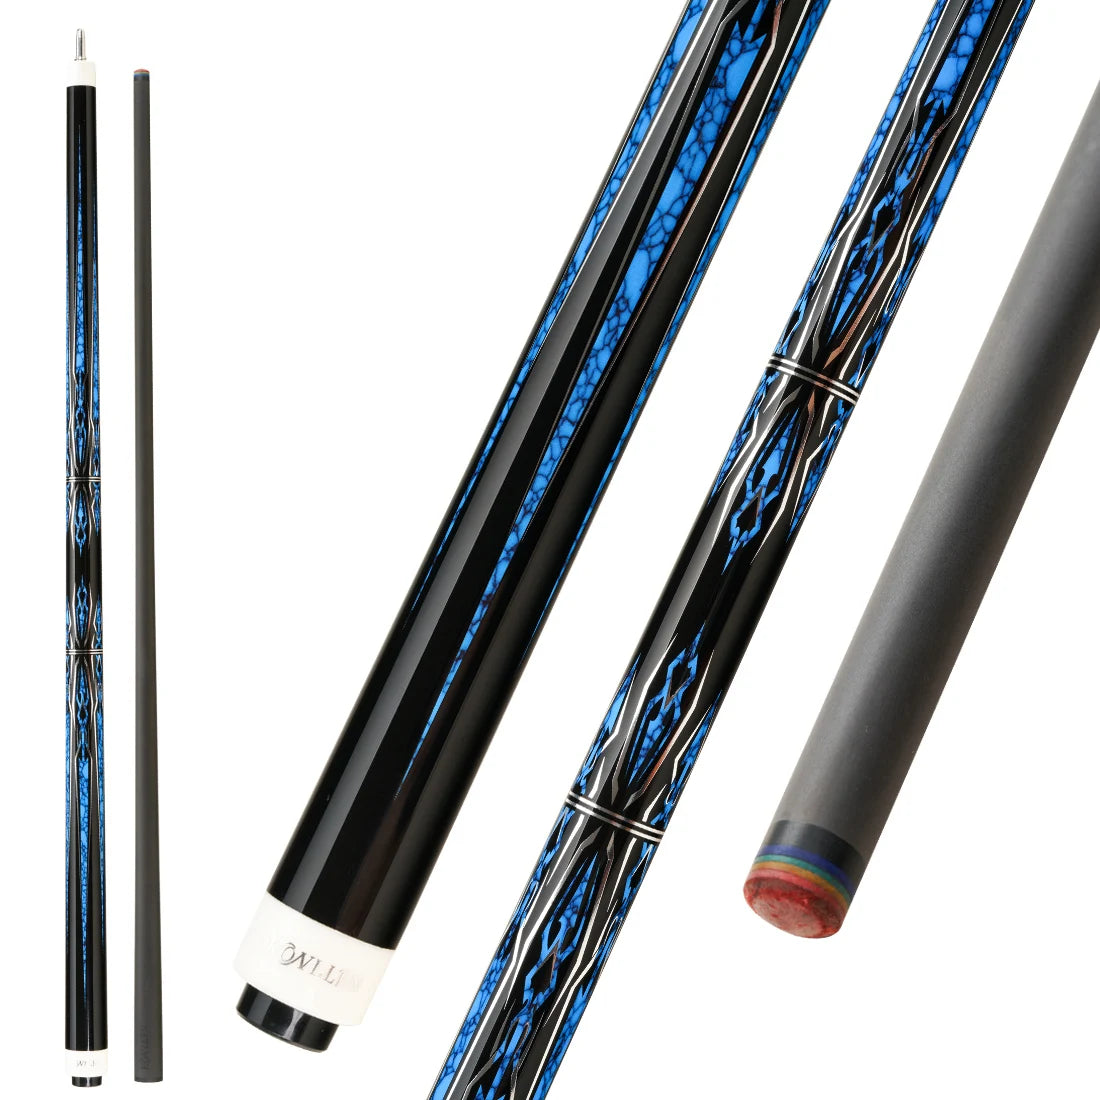 KONLLEN Billiard KL-BP Carbon Fiber Pool Cue Stick 12.2mm Tip 3*8/8 Uniloc Joint Pin Professional Low Deflection Stick Kit